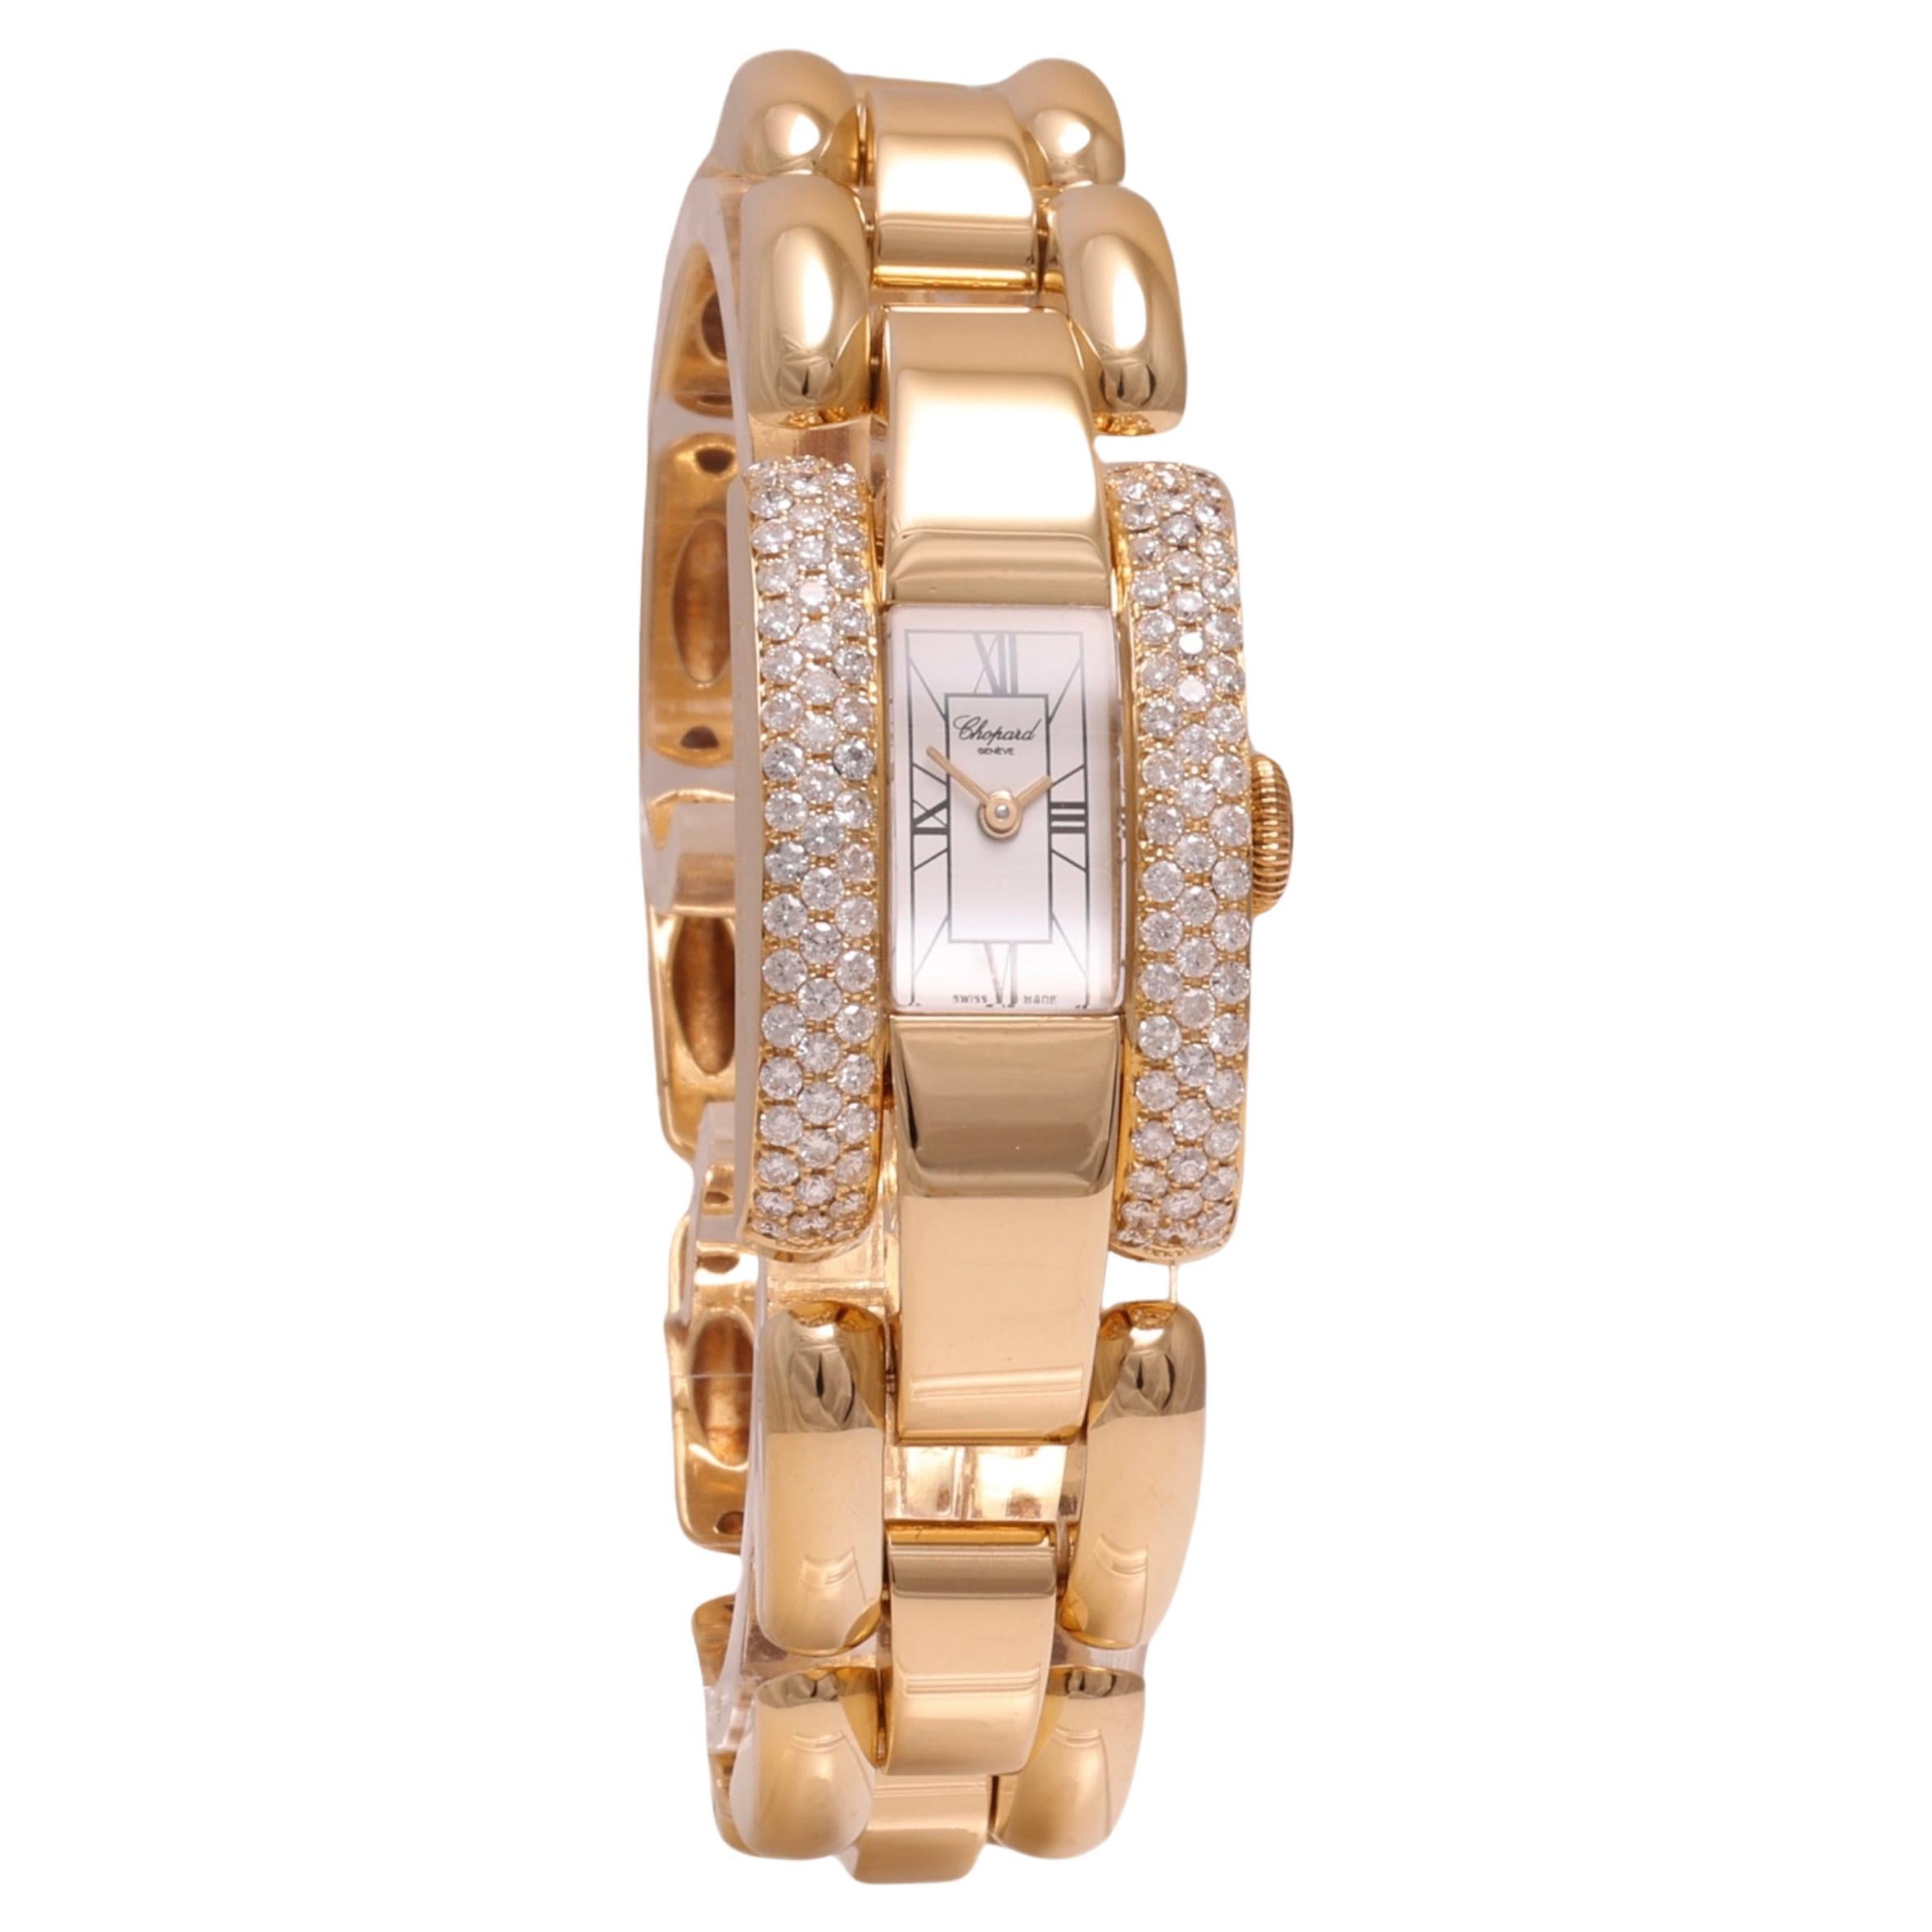 18 Kt. Gold & Diamonds Chopard La Strada Wrist Watch